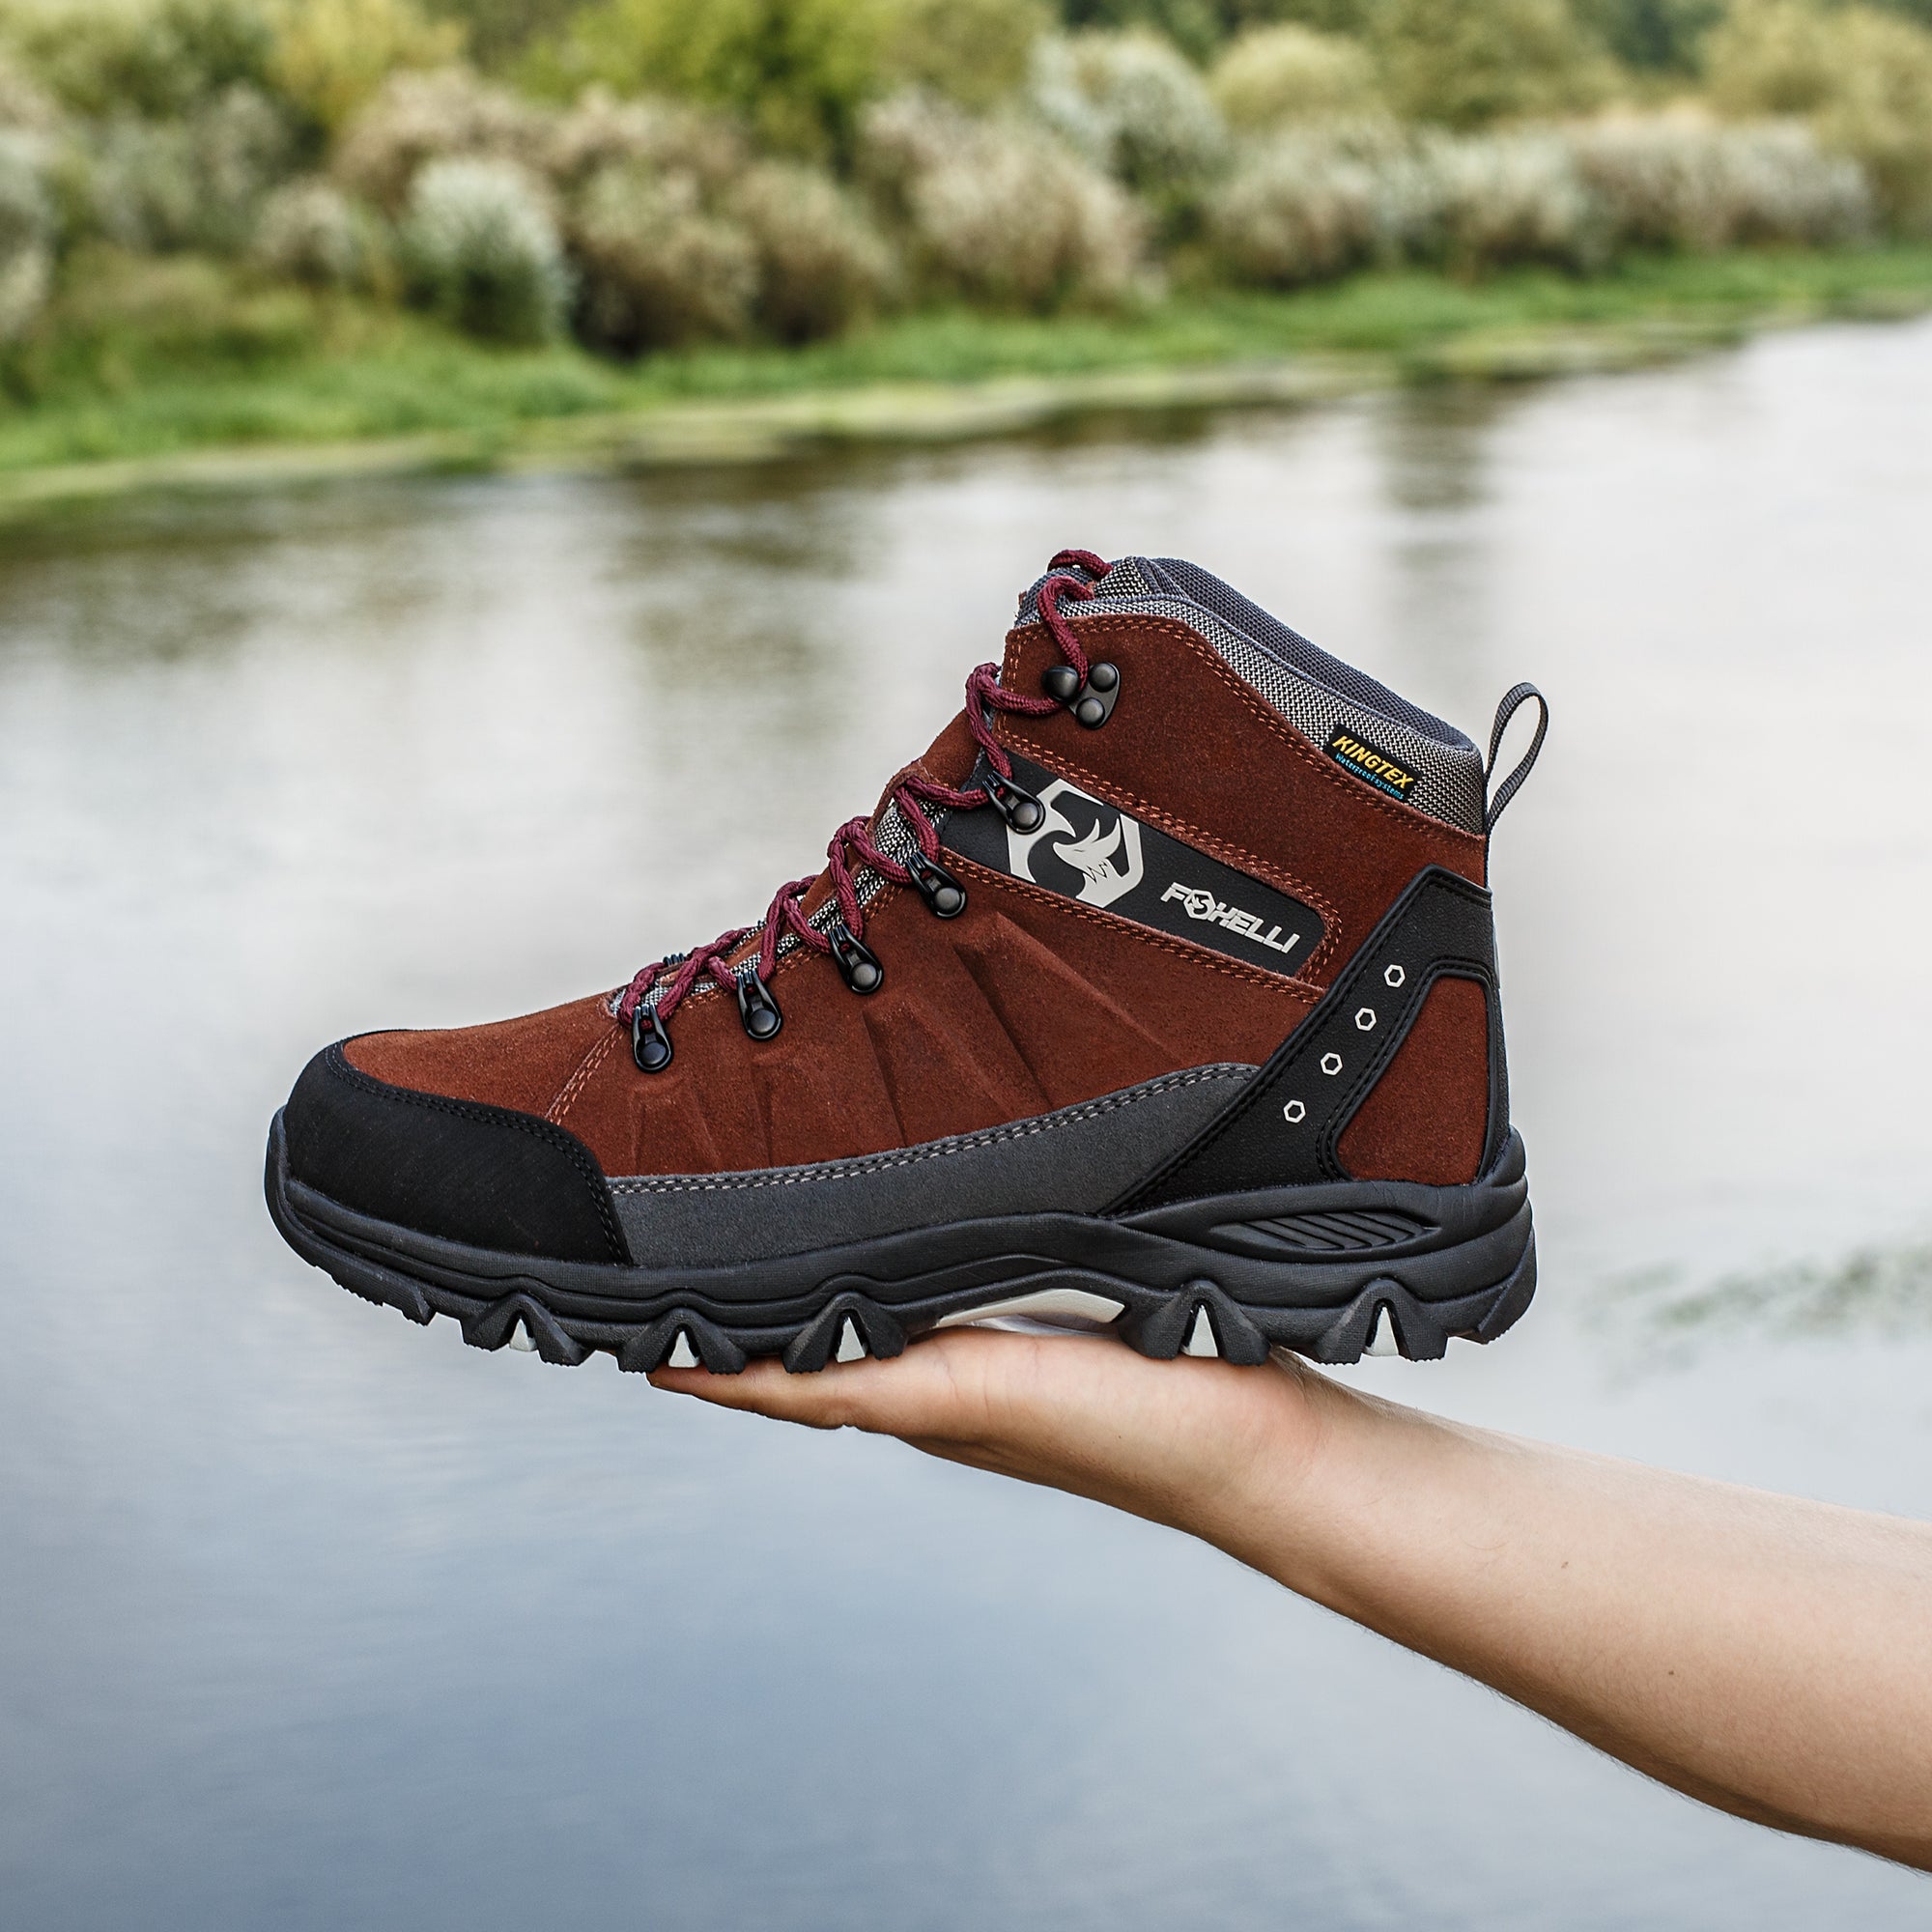 Foxelli Men's Hiking Boots, Waterproof